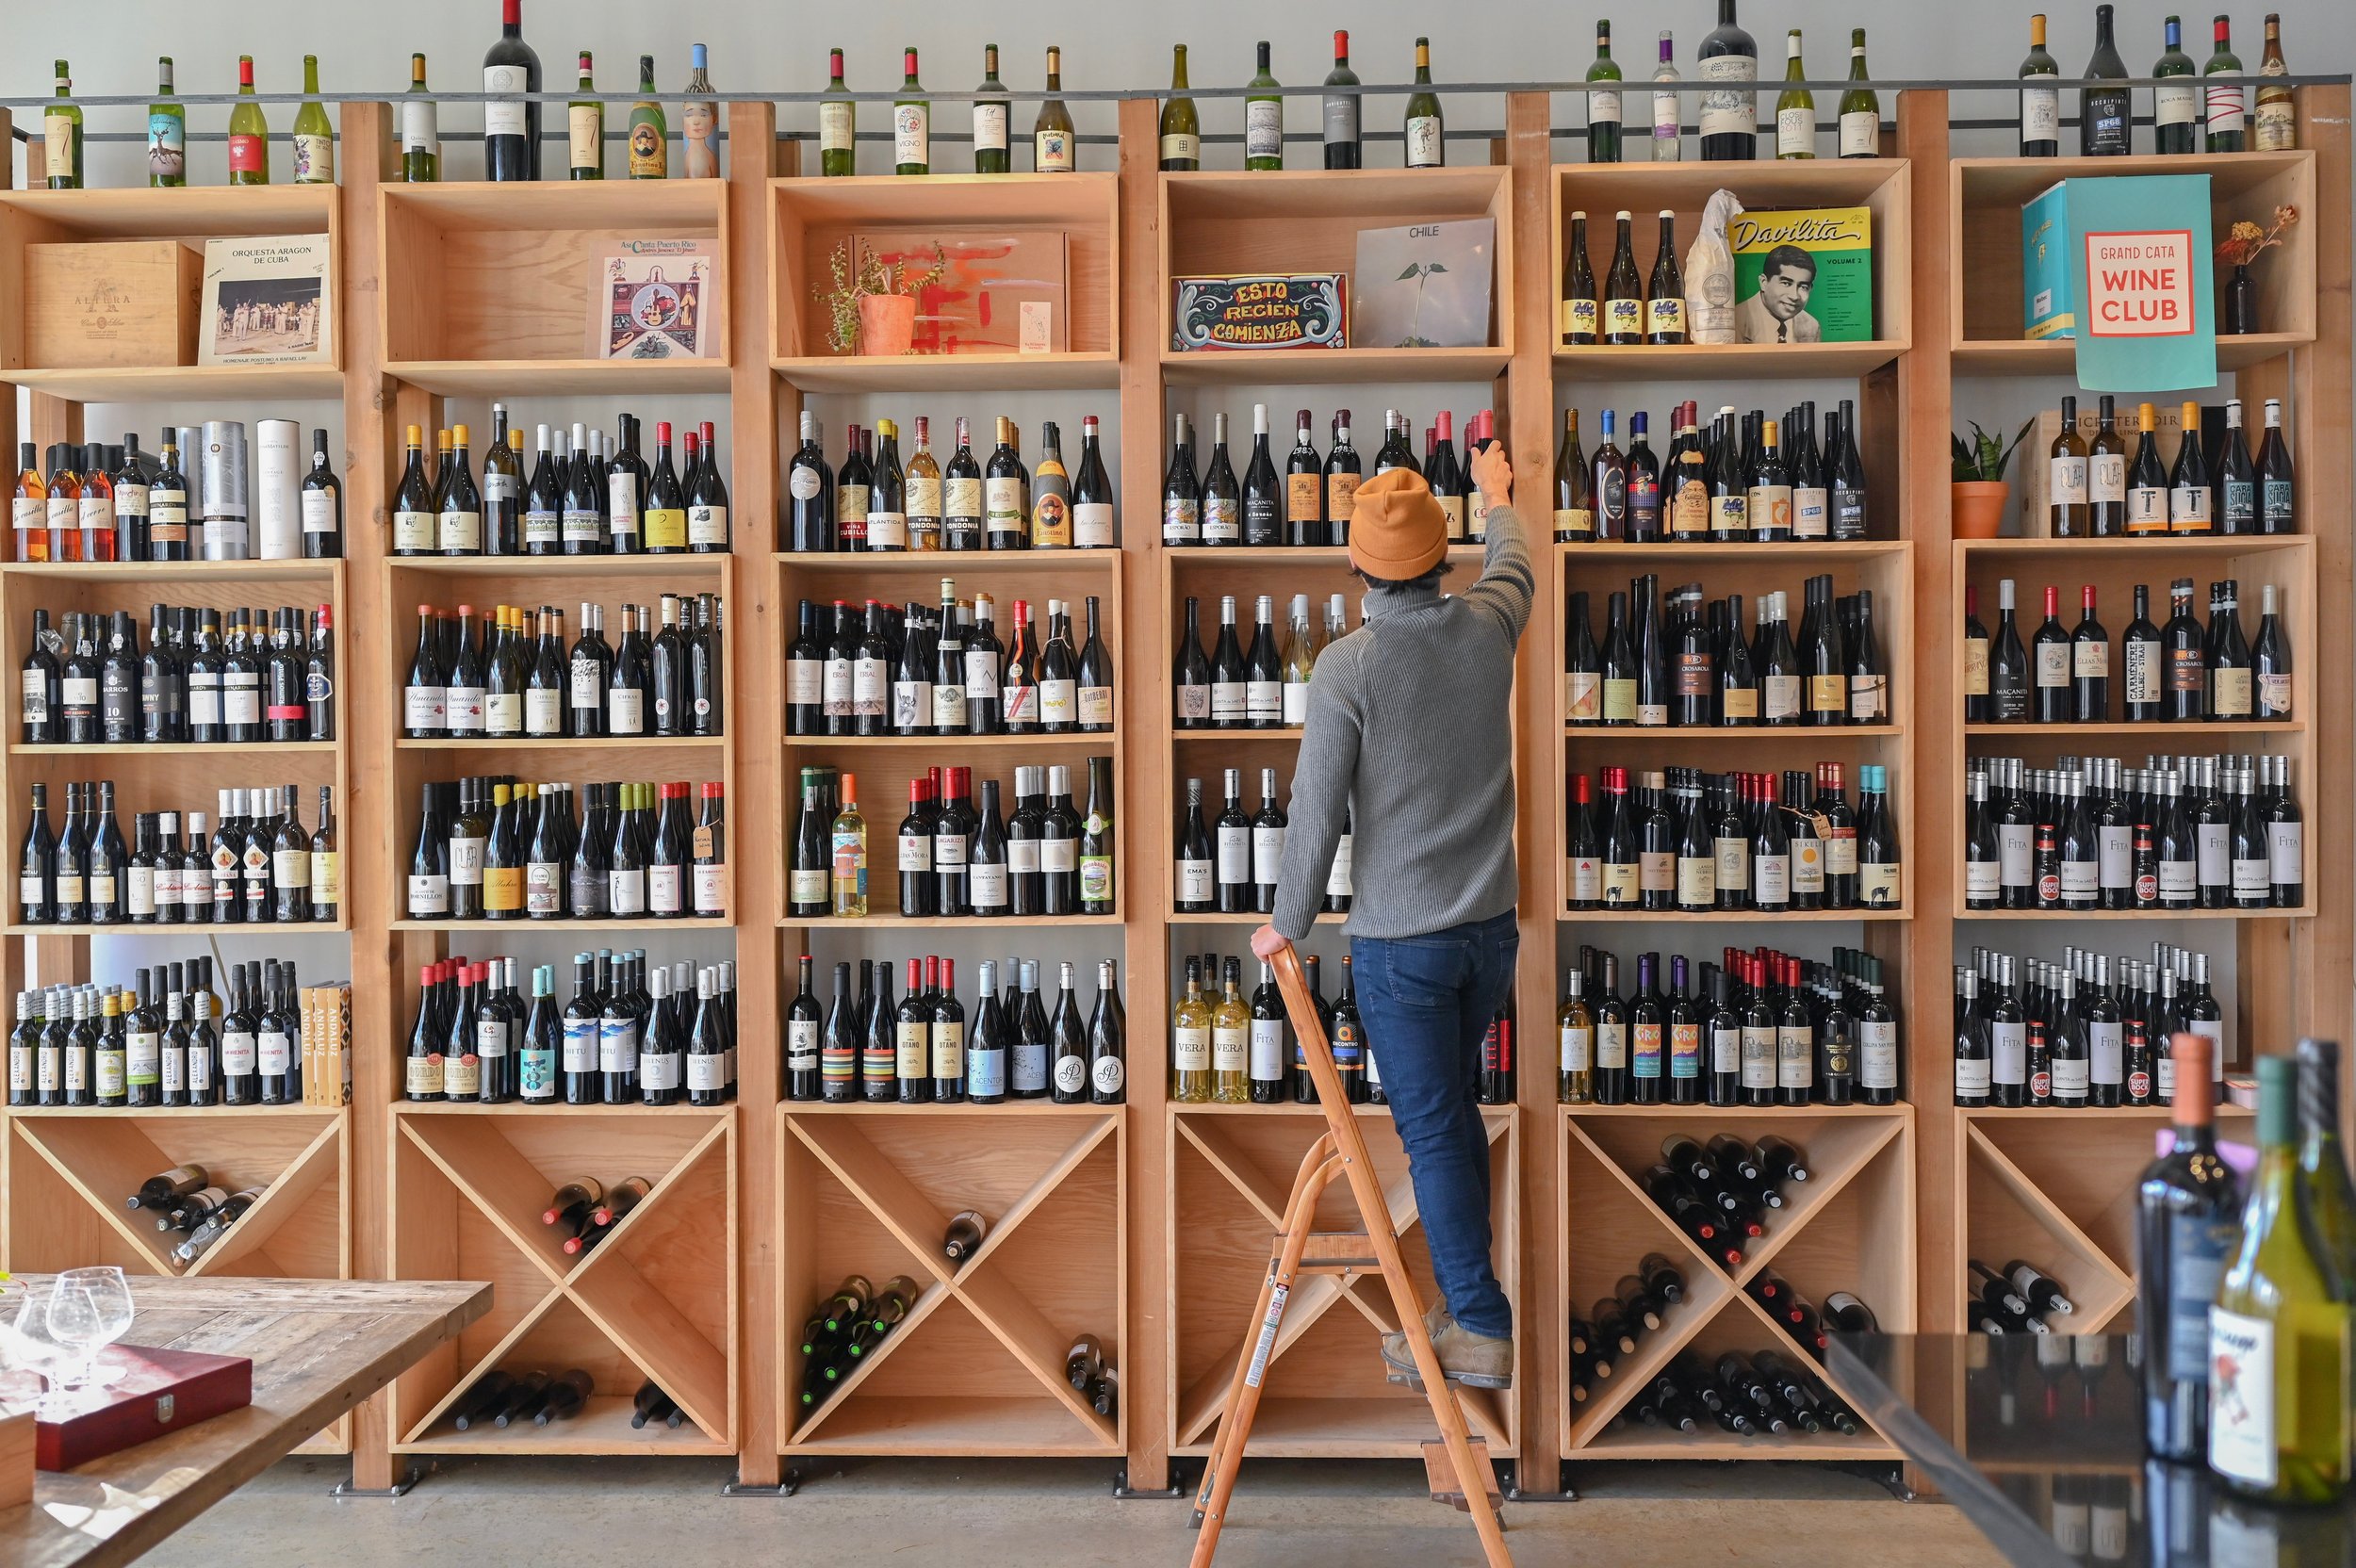 Shop Copa di Vino Wines - Buy Online